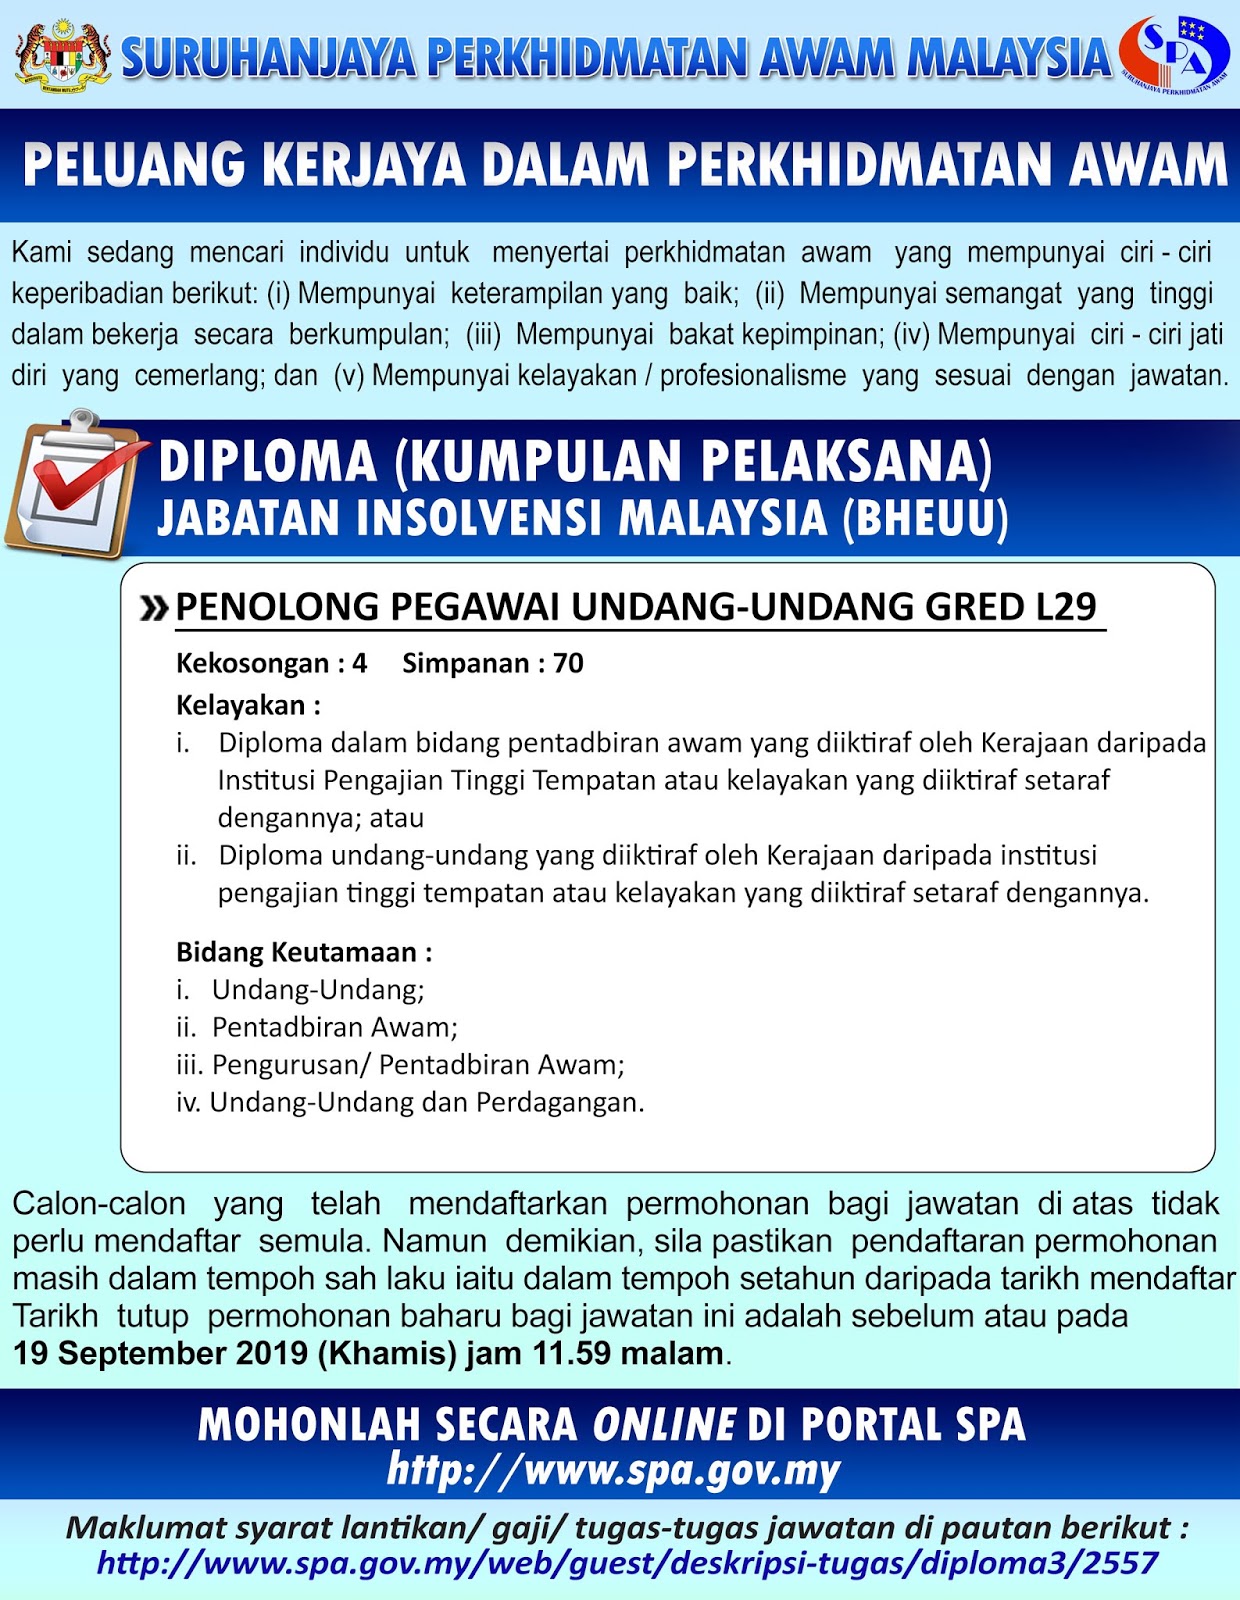 Jawatan Kosong Jabatan Insolvensi Malaysia 2019 - SUMBER 